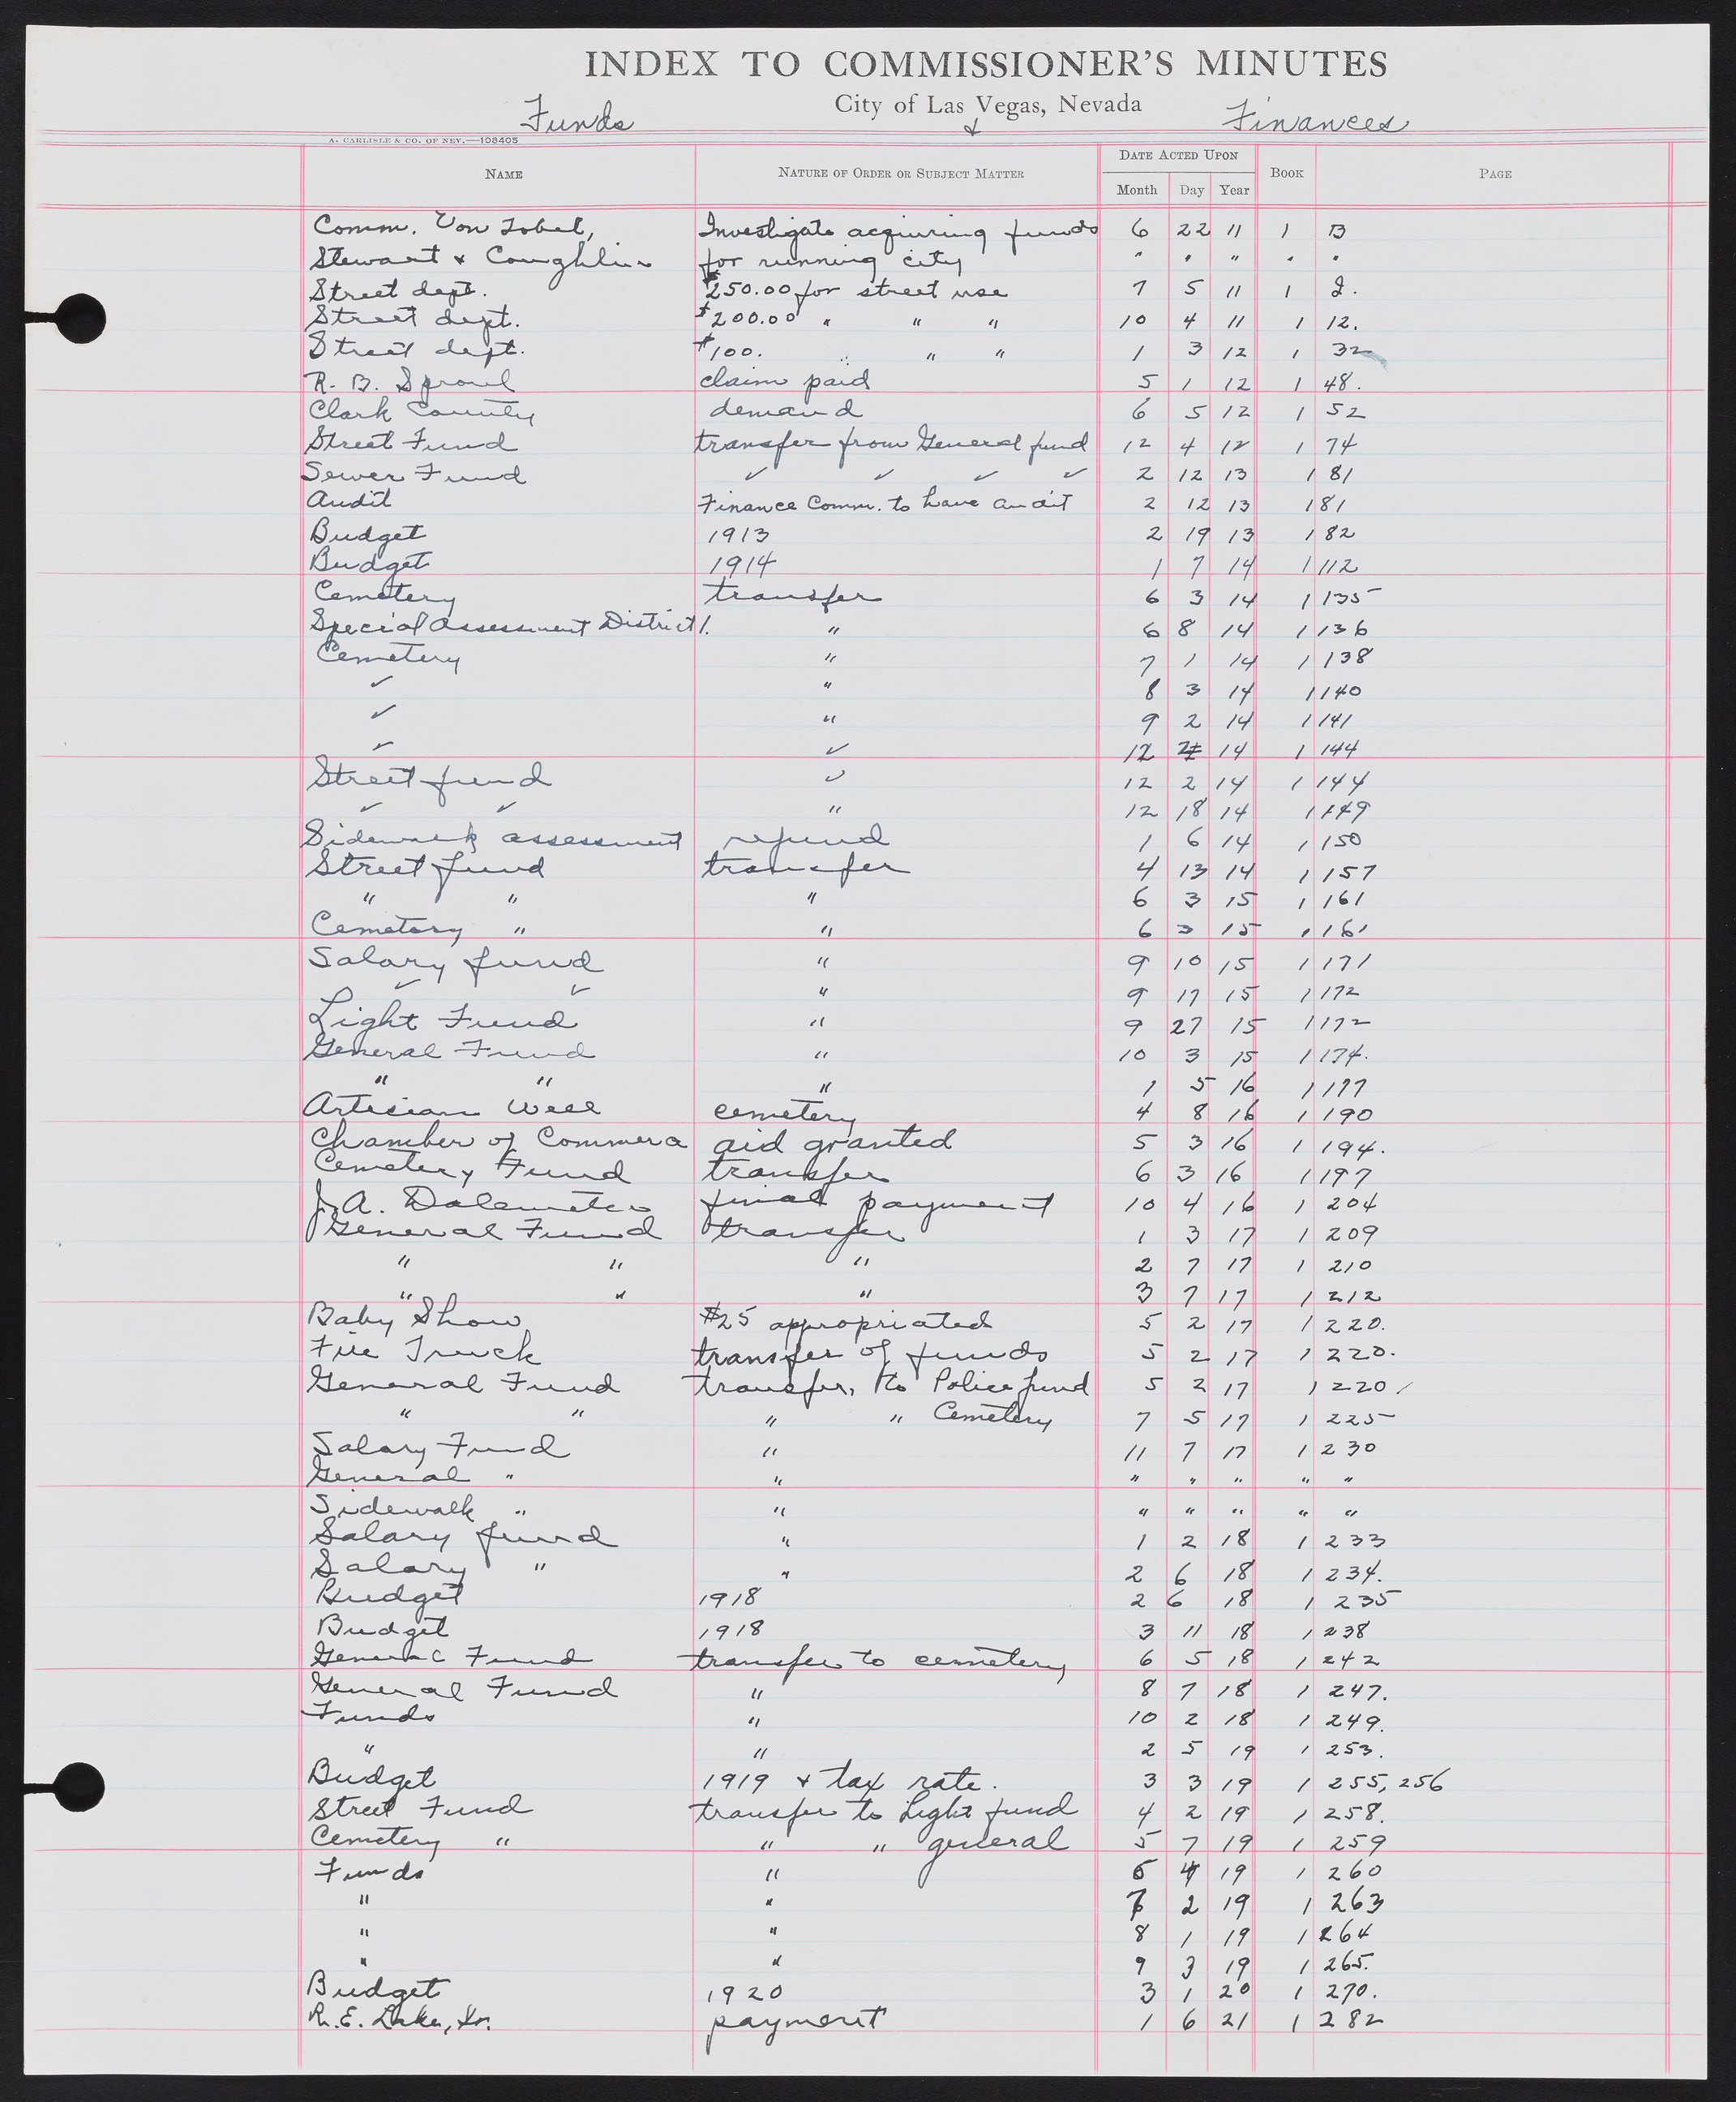 Las Vegas City Commission Minutes Index 1, 1911-1960: documents, item 137